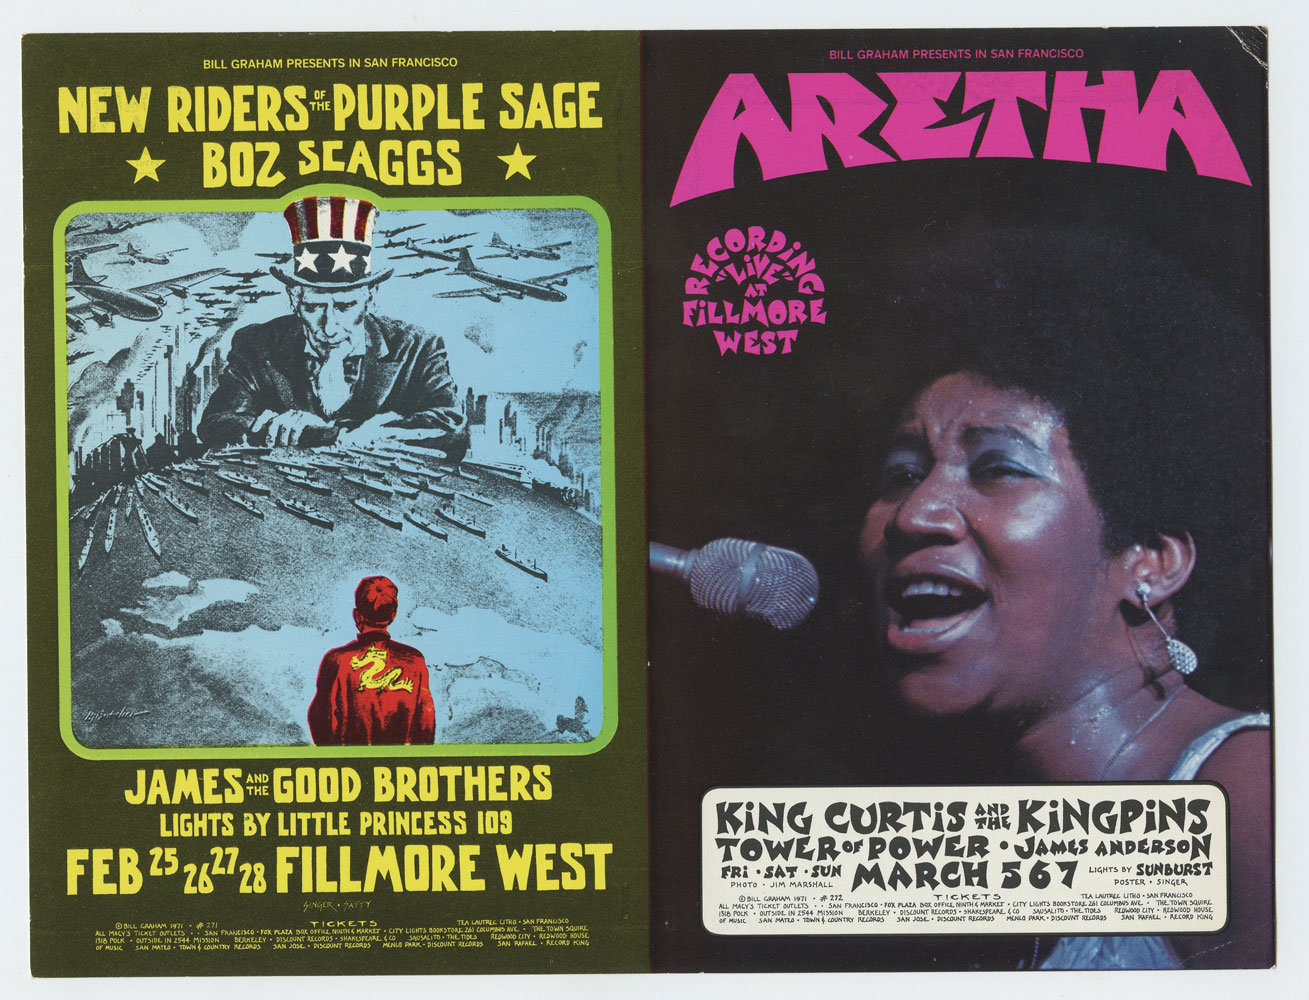 BG 271 BG 272 Postcard Double Boz Scaggs Aretha Franklin 1971 Feb 25 